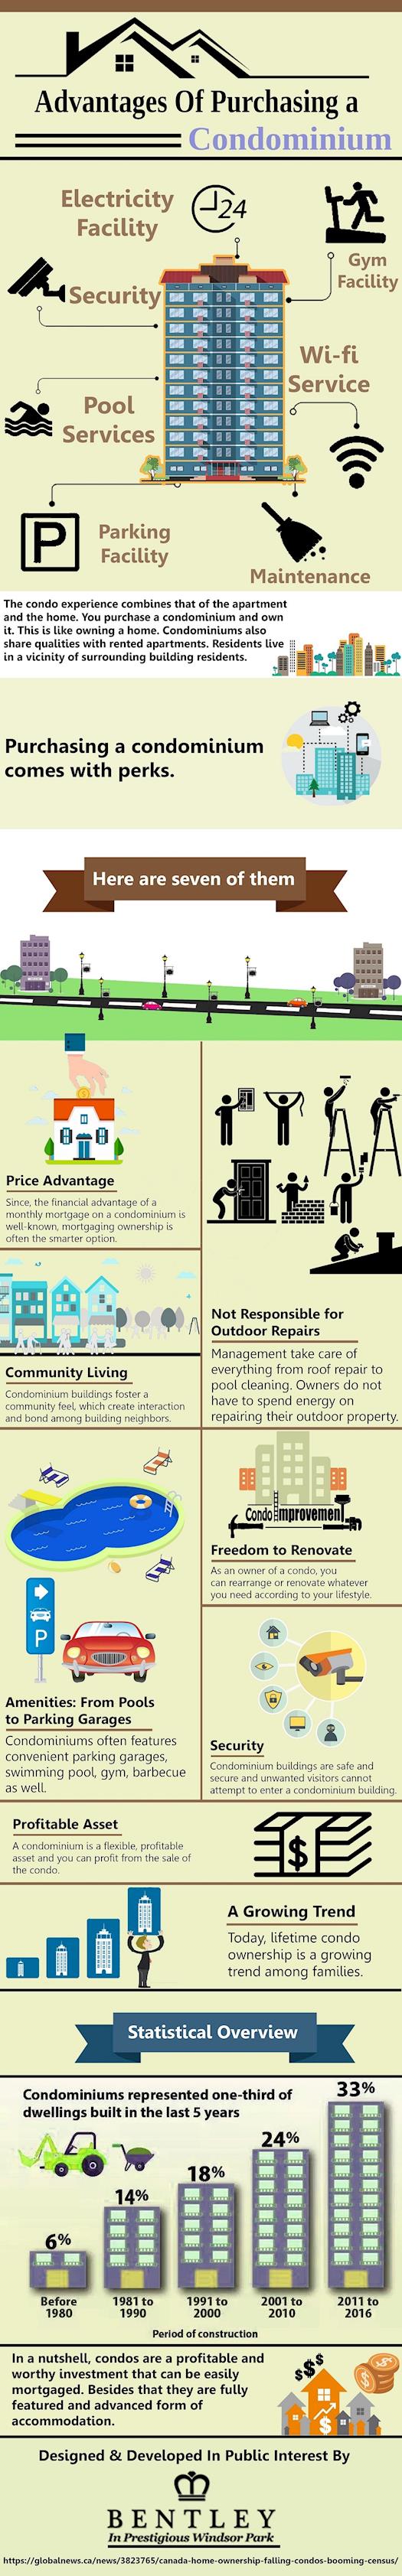 Advantages to Purchasing a Condominium